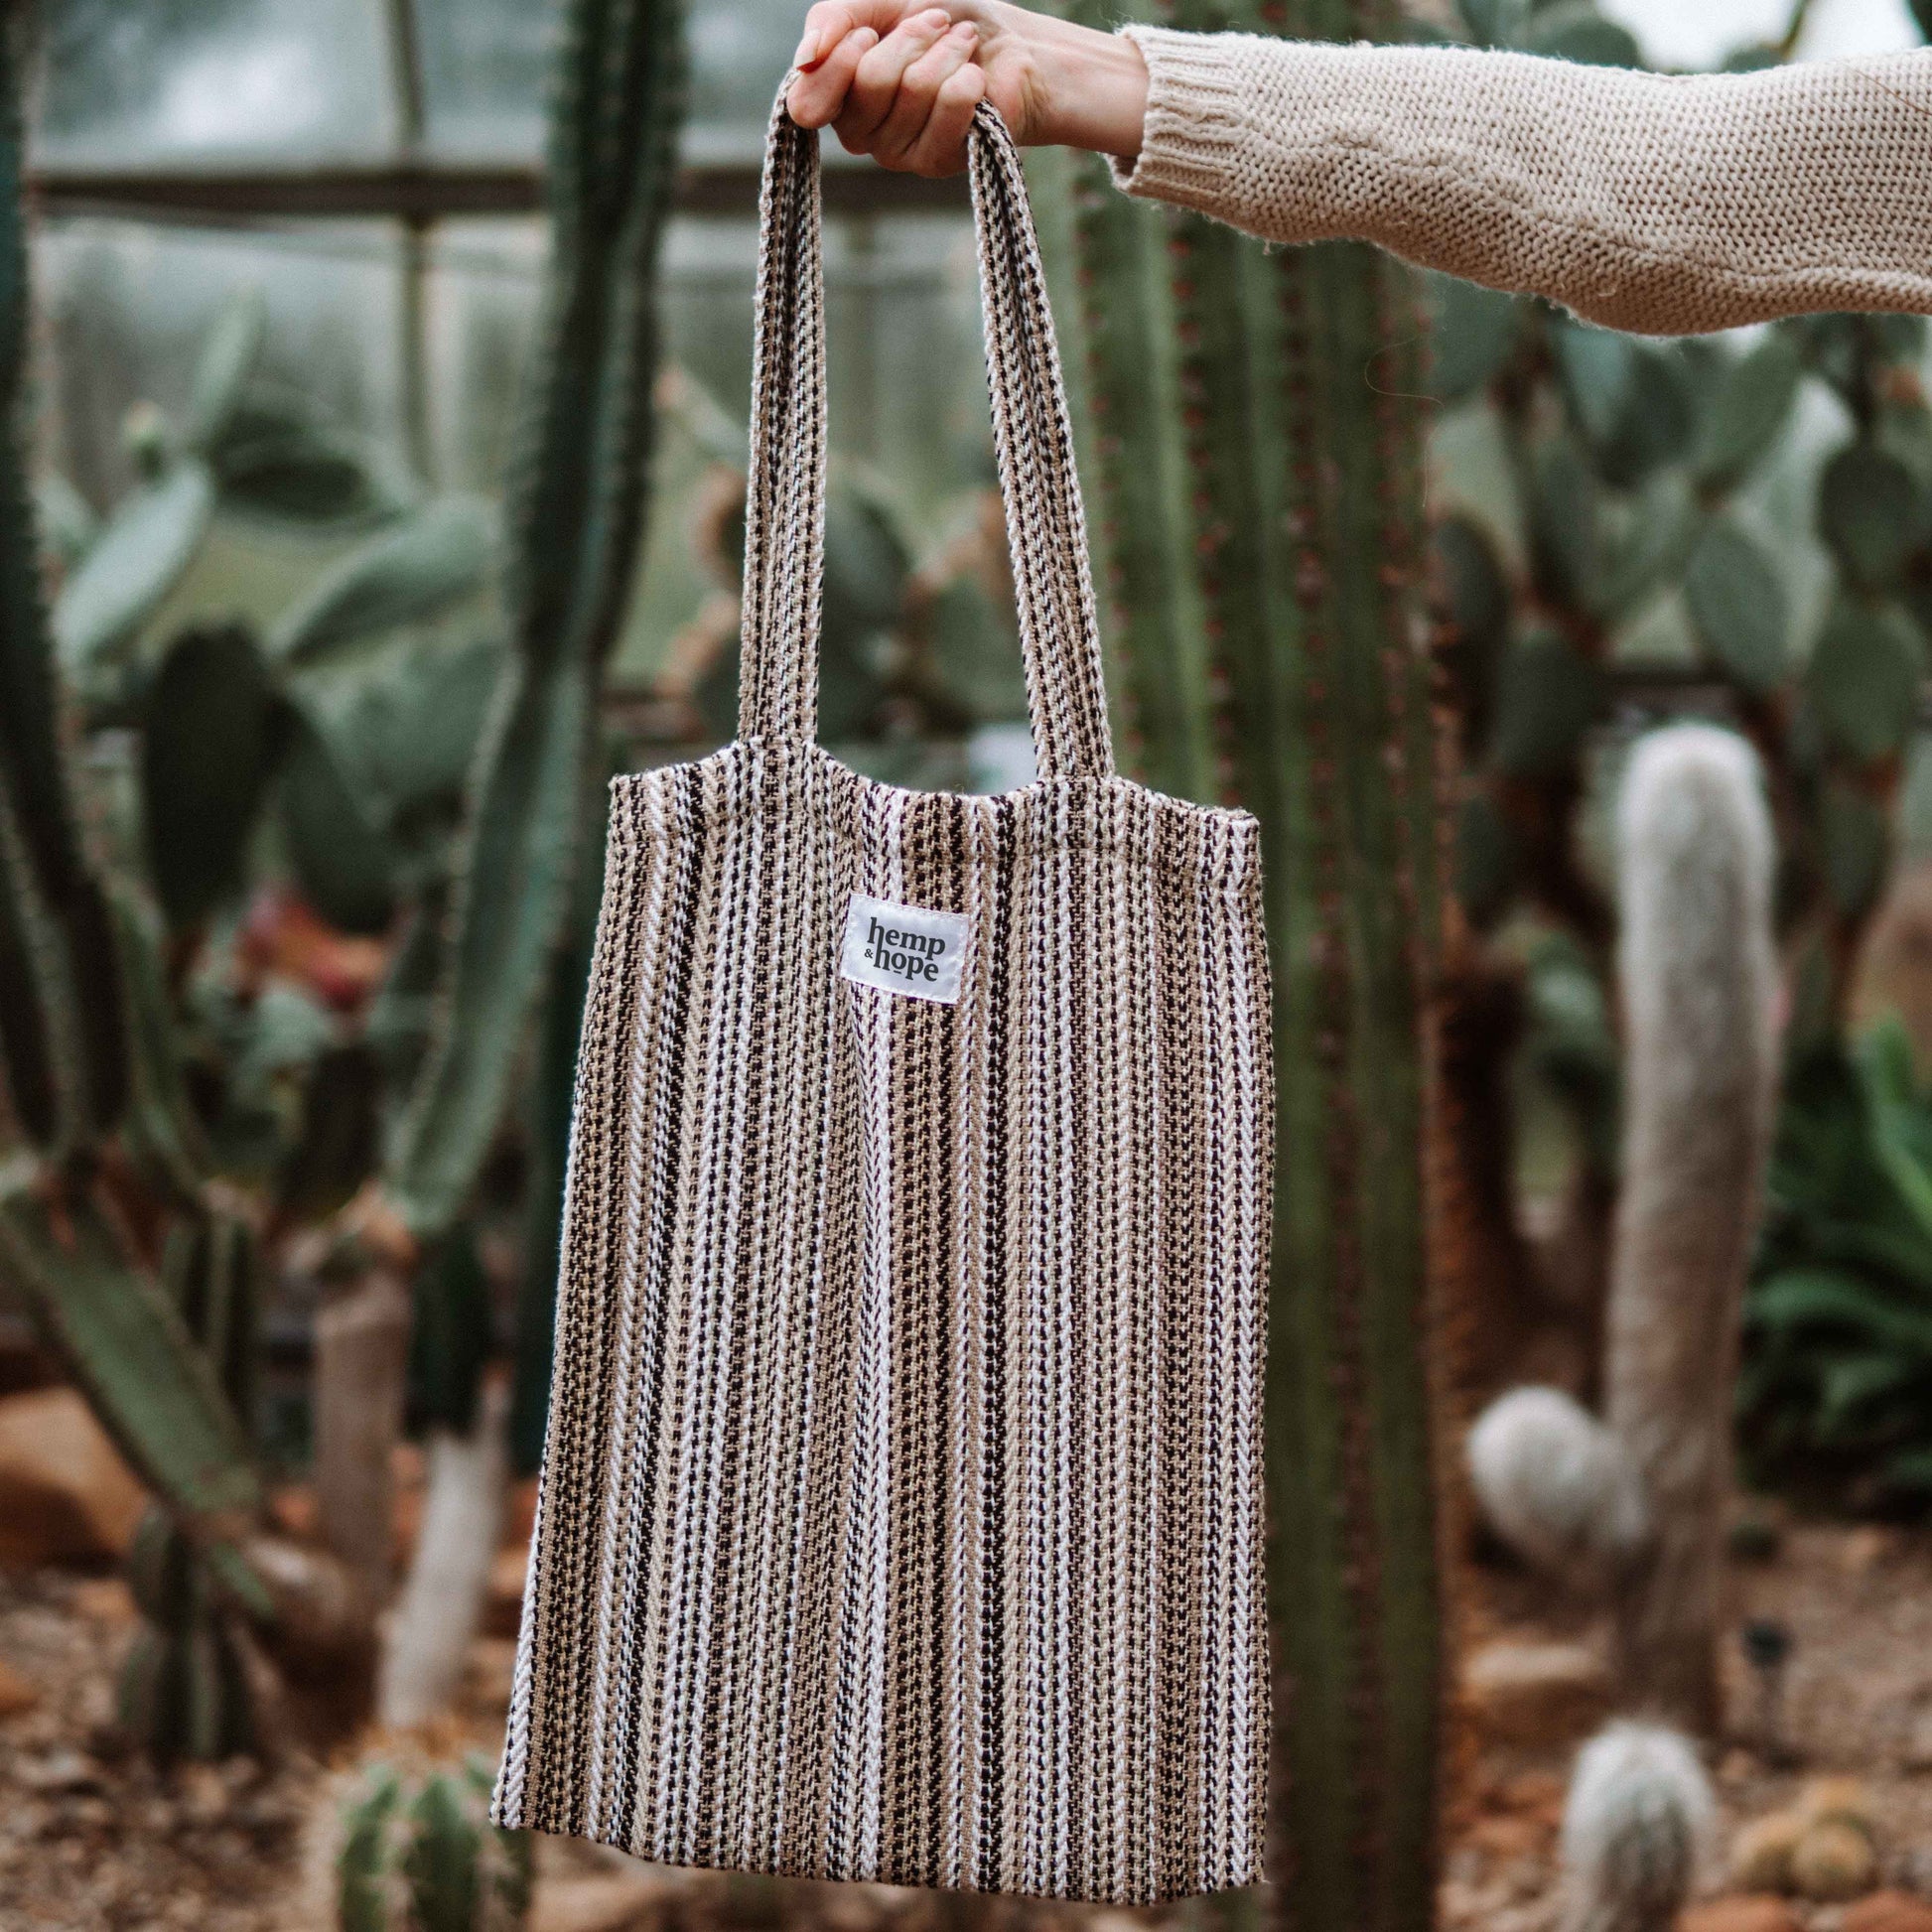 Luggage & Bags > Shopping Bags Hemp Tote Bag - Stripes Hemp & Hope ethical sustainable handmade